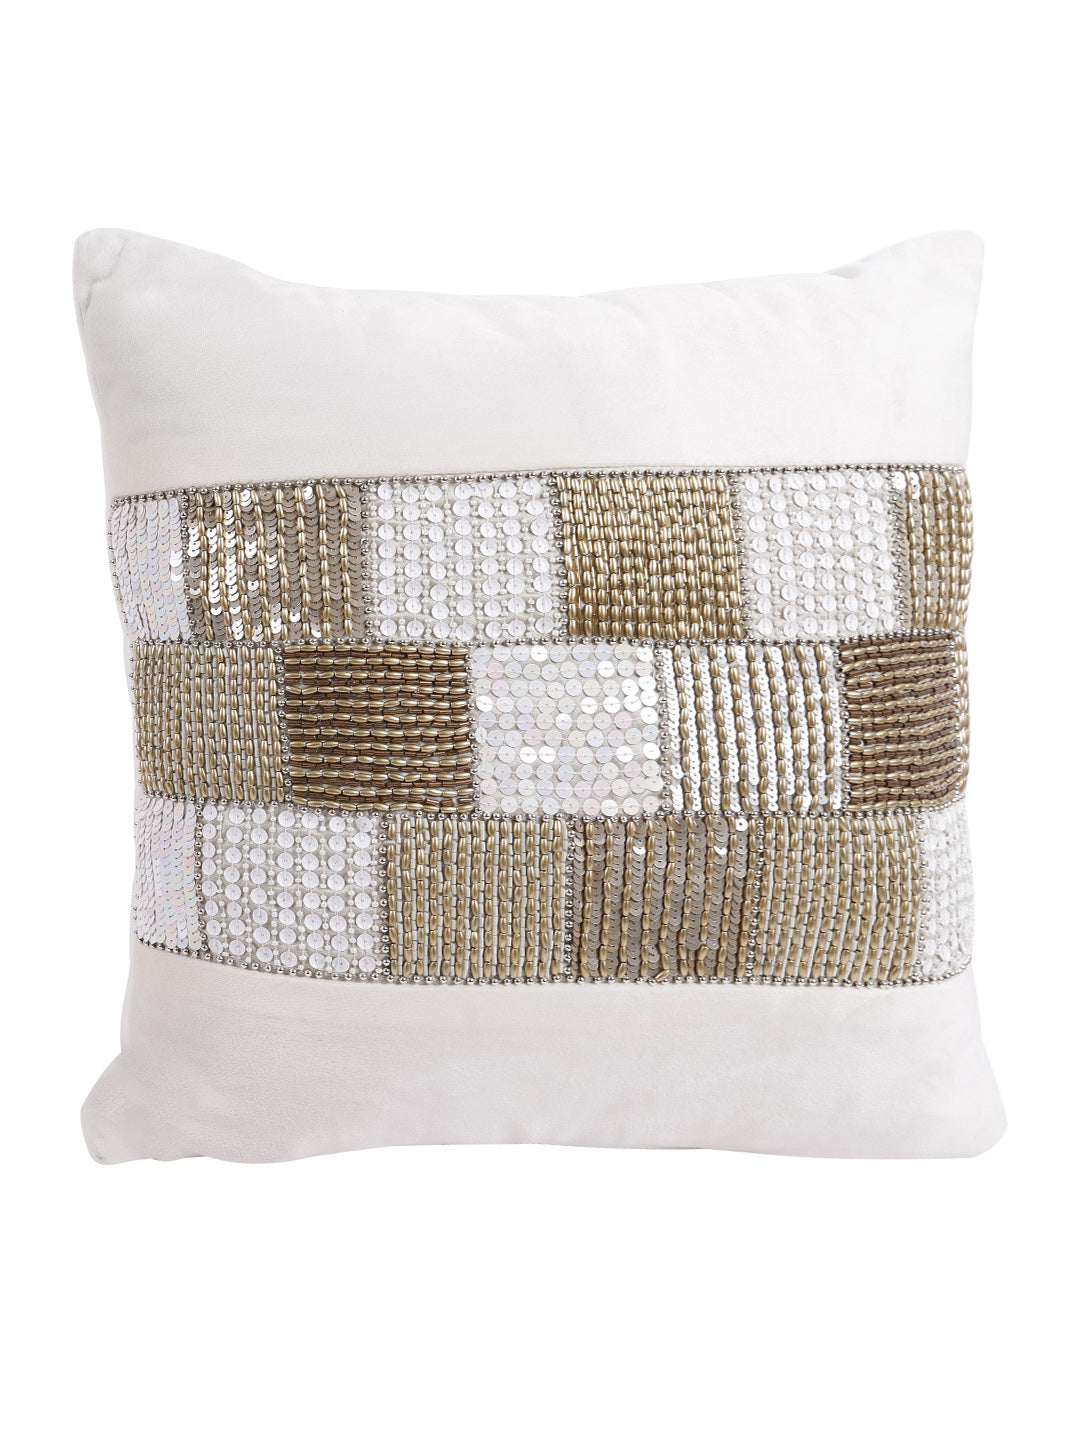 Set Of 2 White & Gold-Toned Embellished Velvet Square Cushion Covers